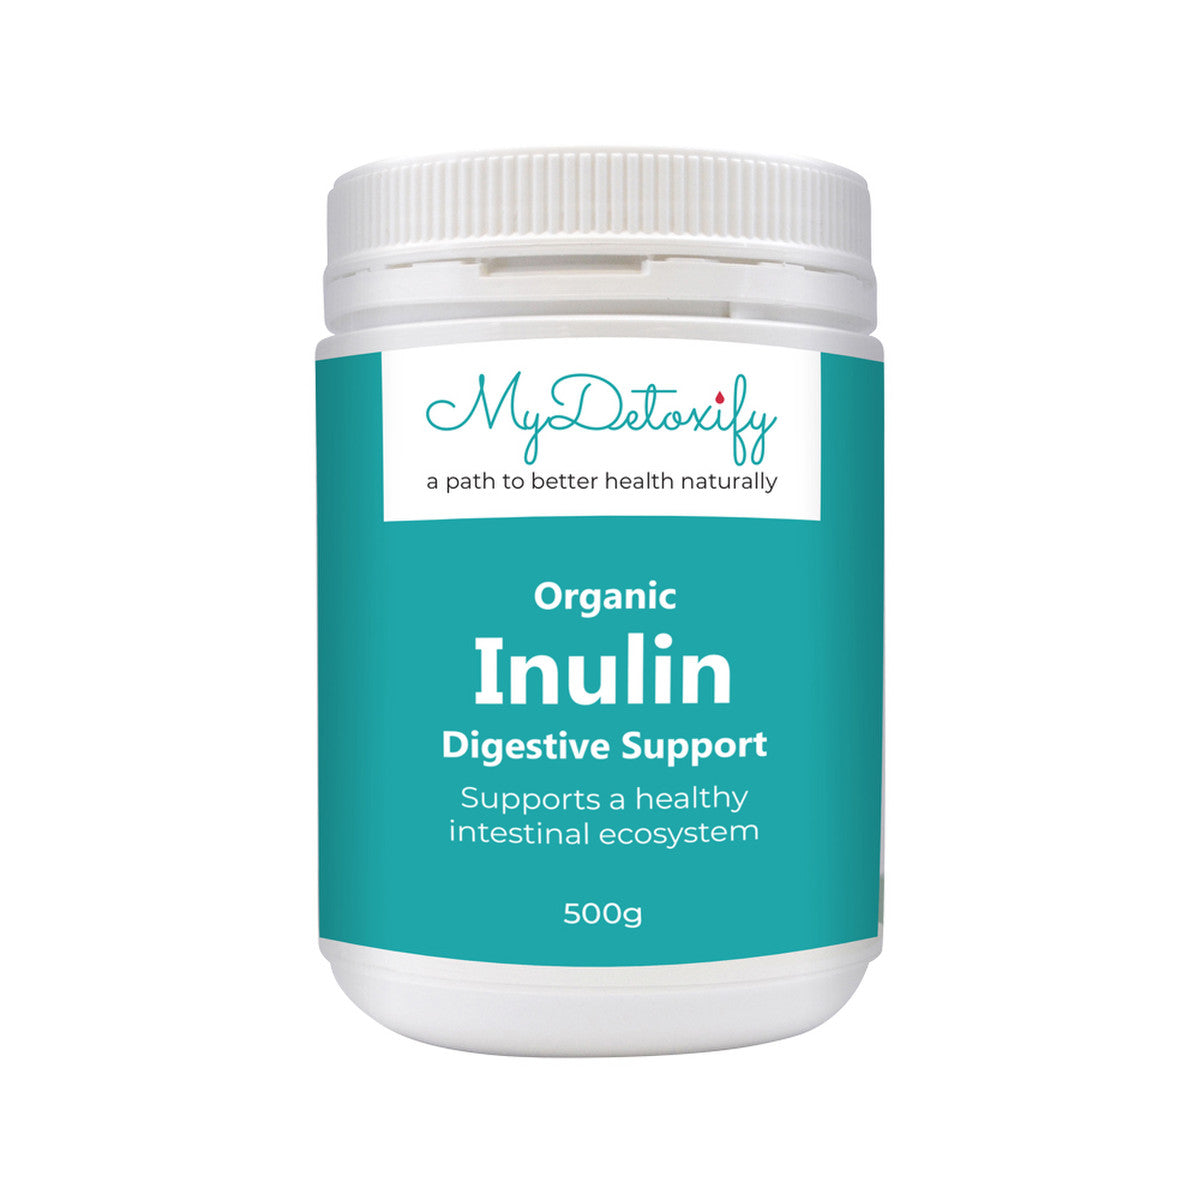 My Detoxify Inulin 250g Or 500g, Digestive Support